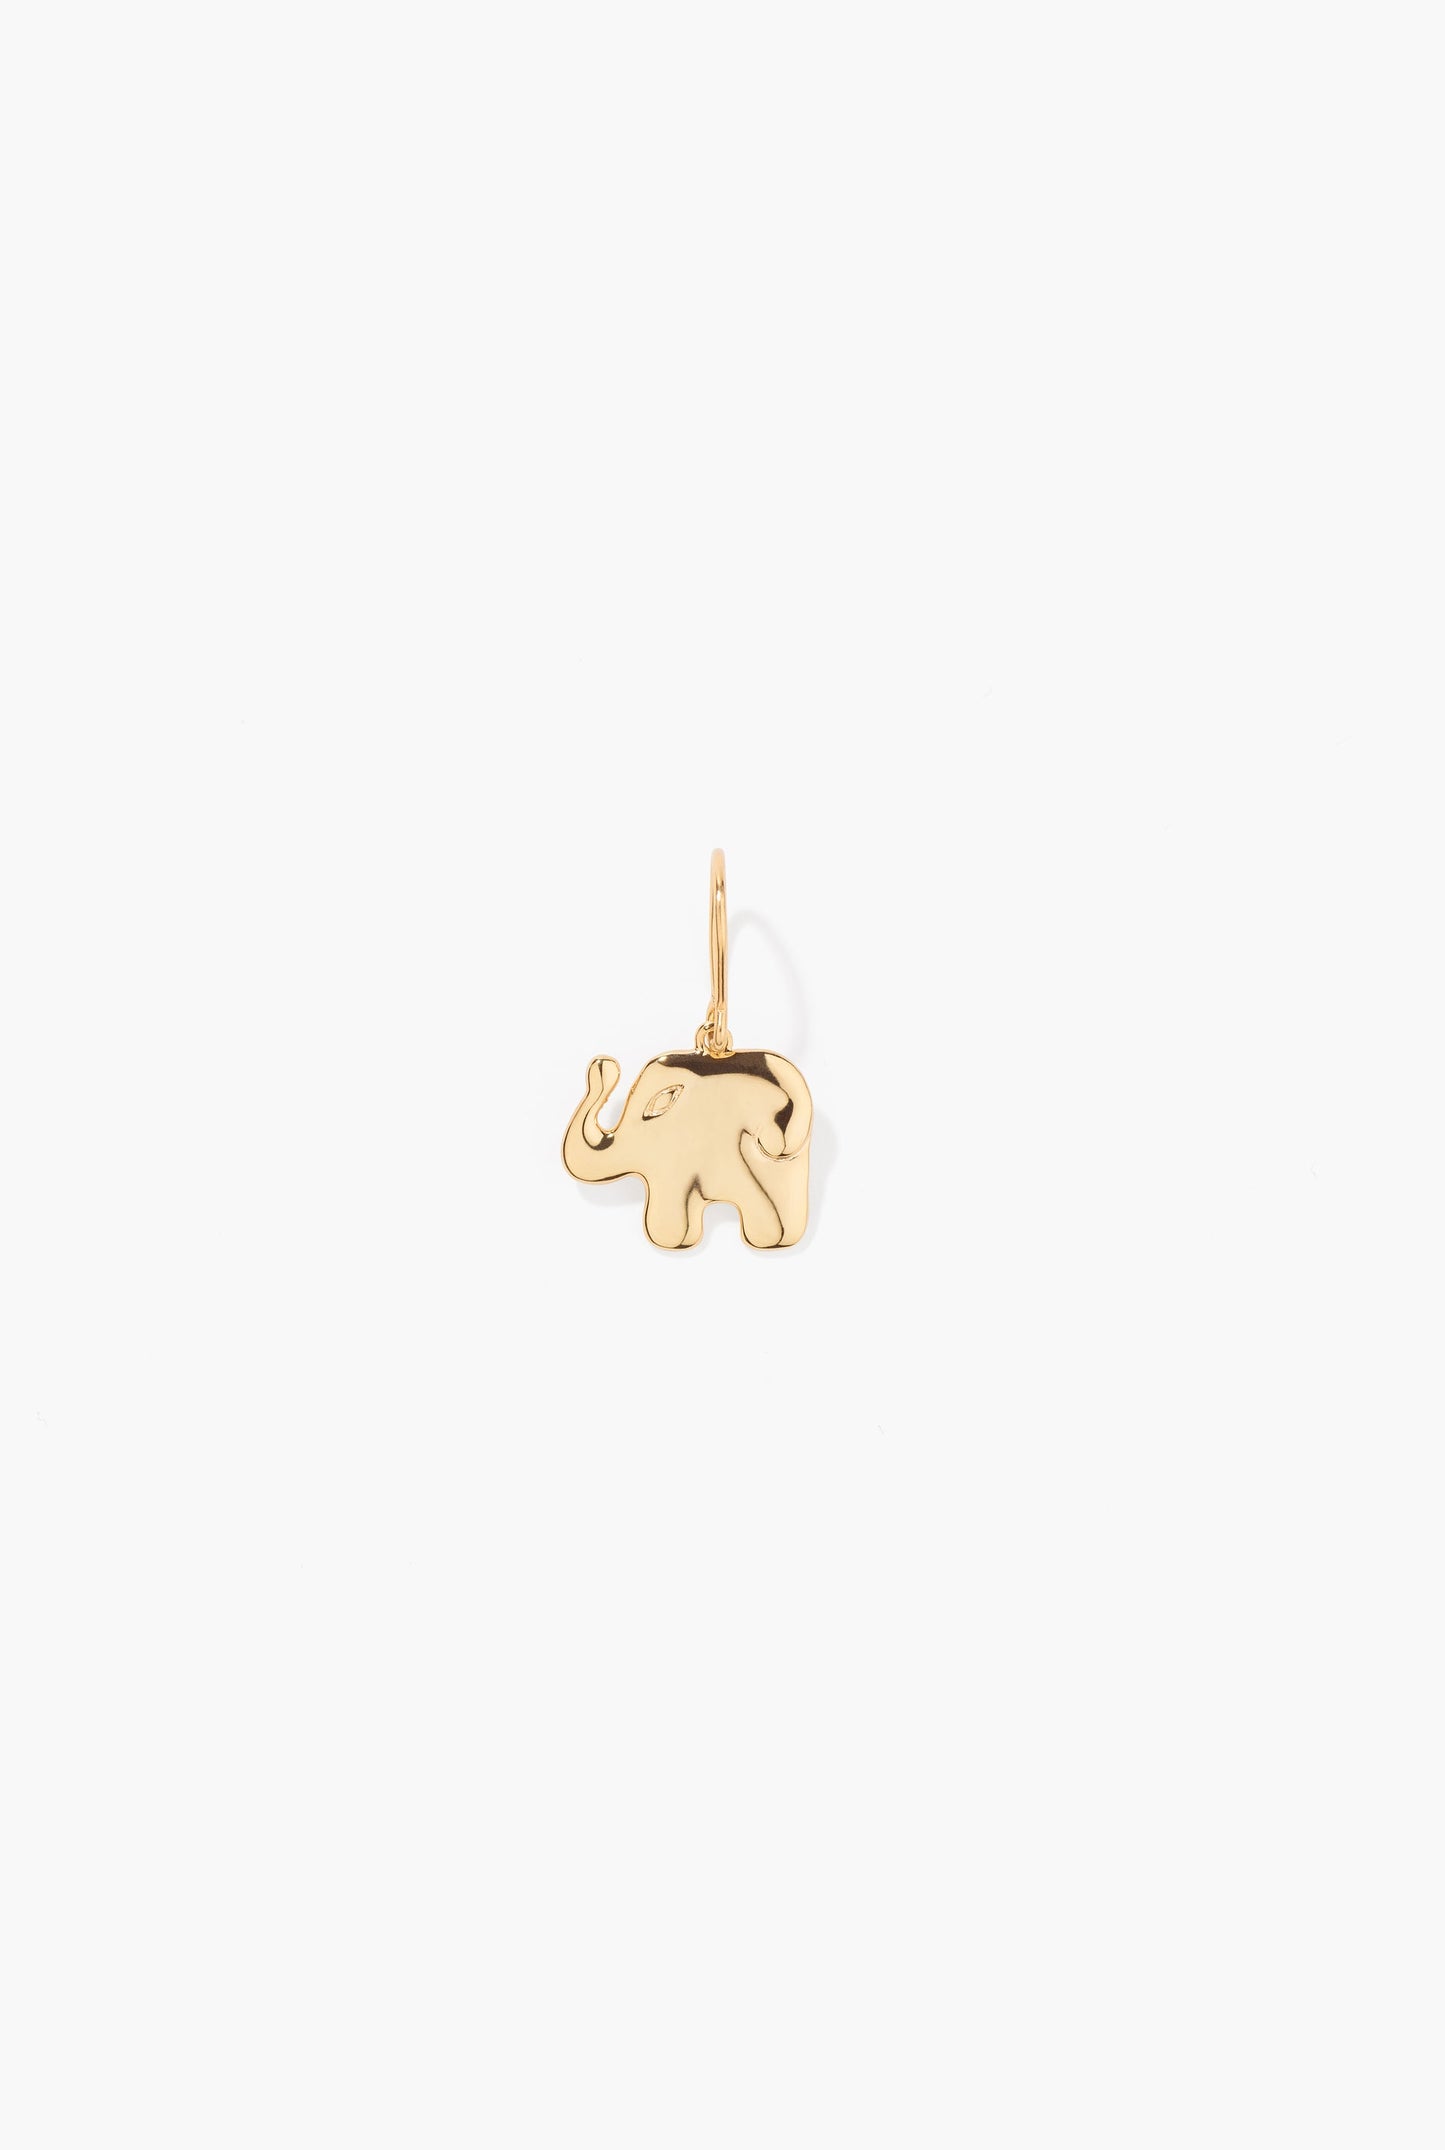 Earrings - AURELIE ELEPHANT (Per unit)